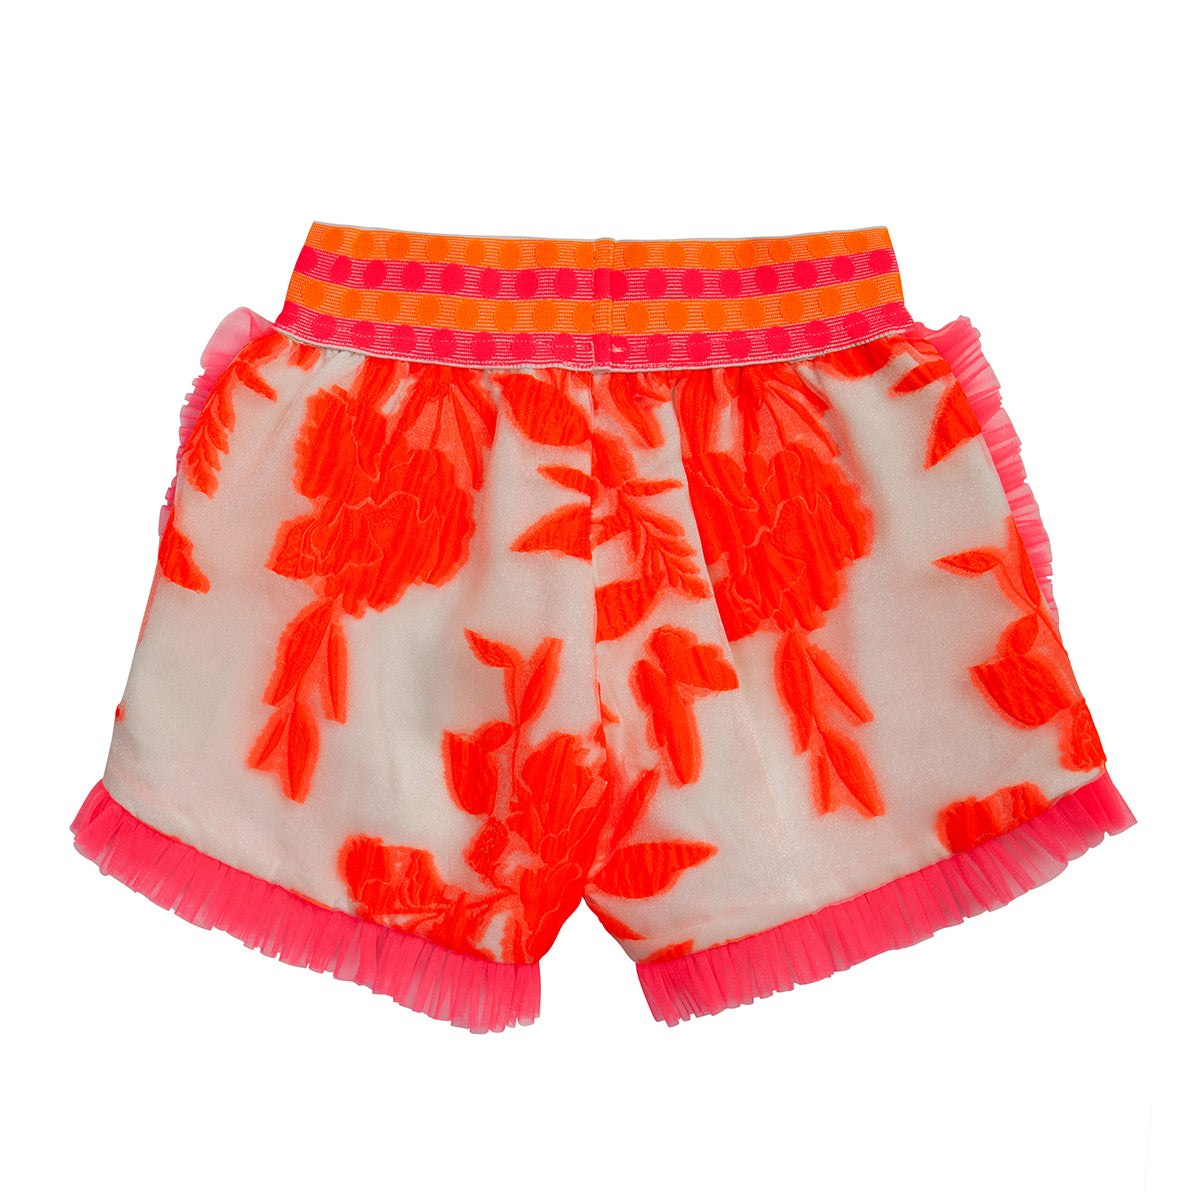 Orange neon floral organza shorts with frills